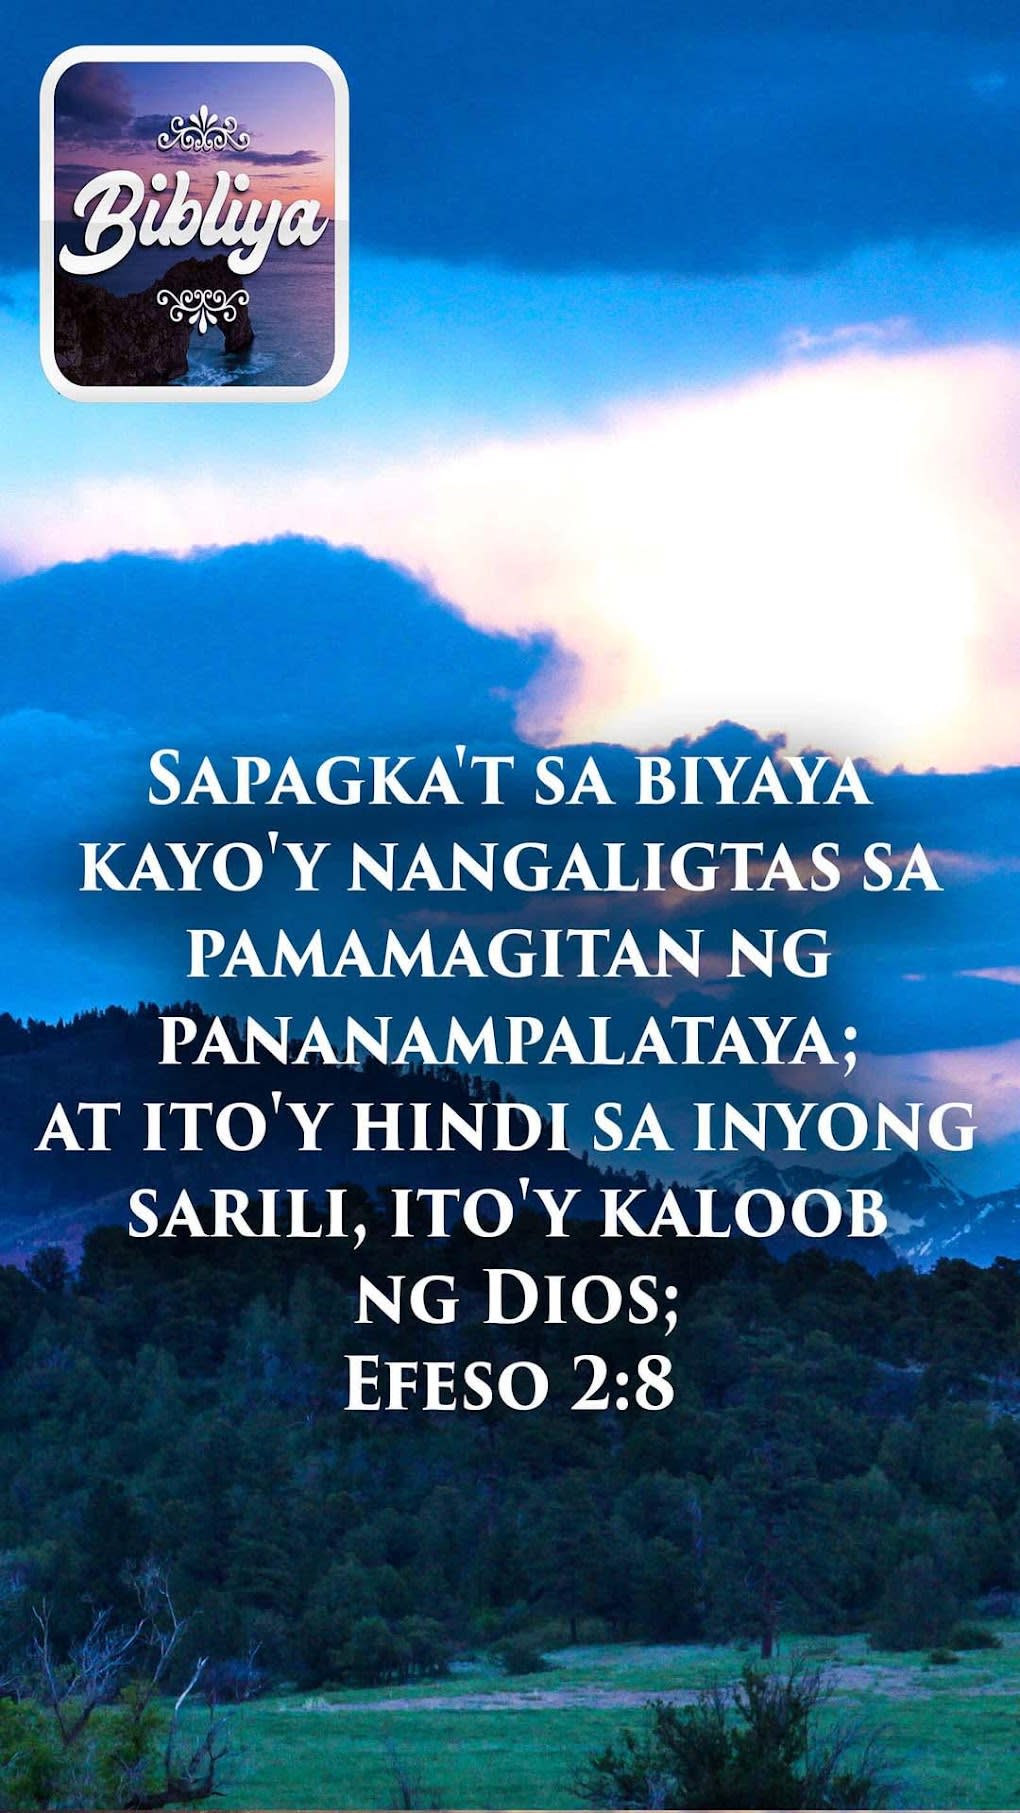 Bible in Tagalog para Android - Download